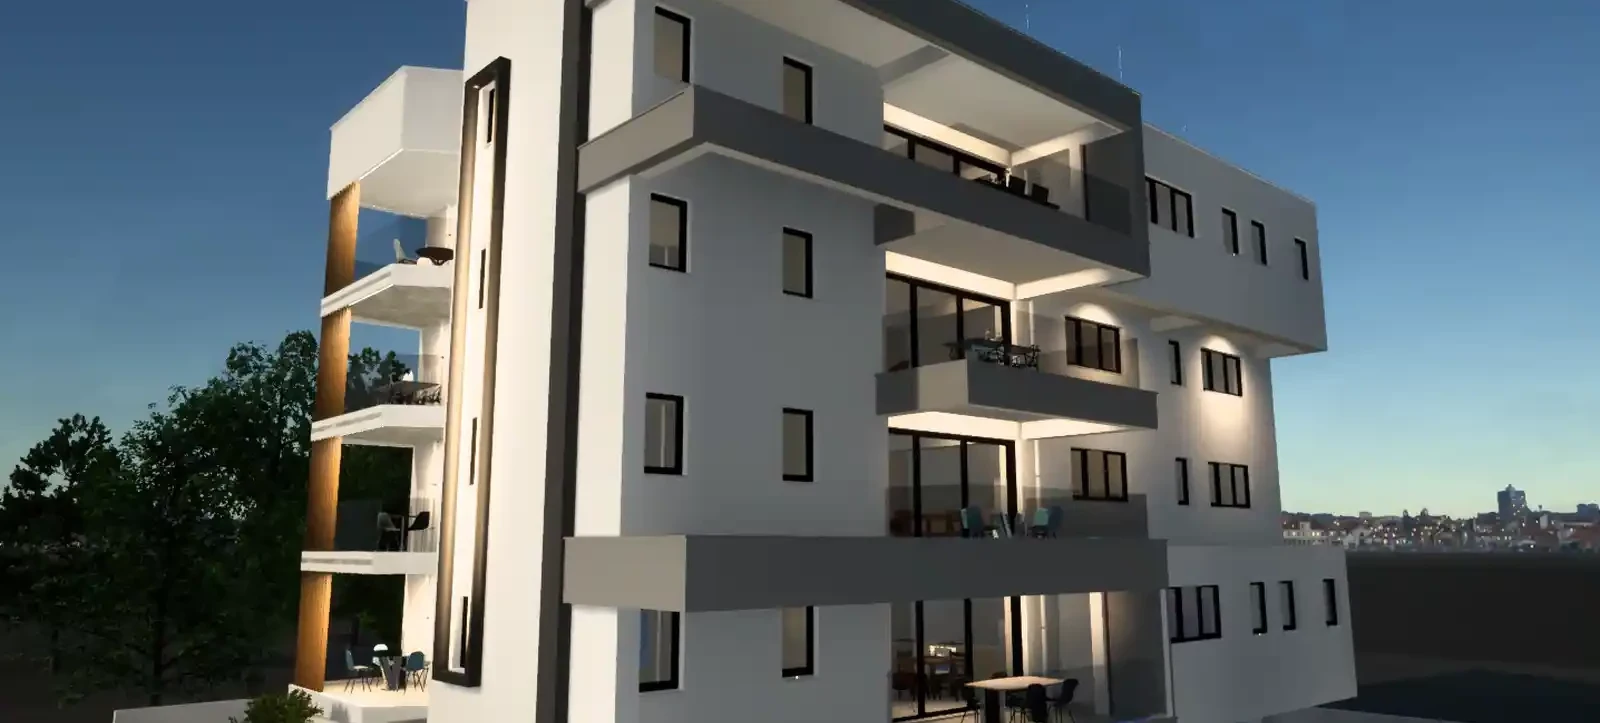 3-bedroom penthouse fоr sаle €269.000, image 1